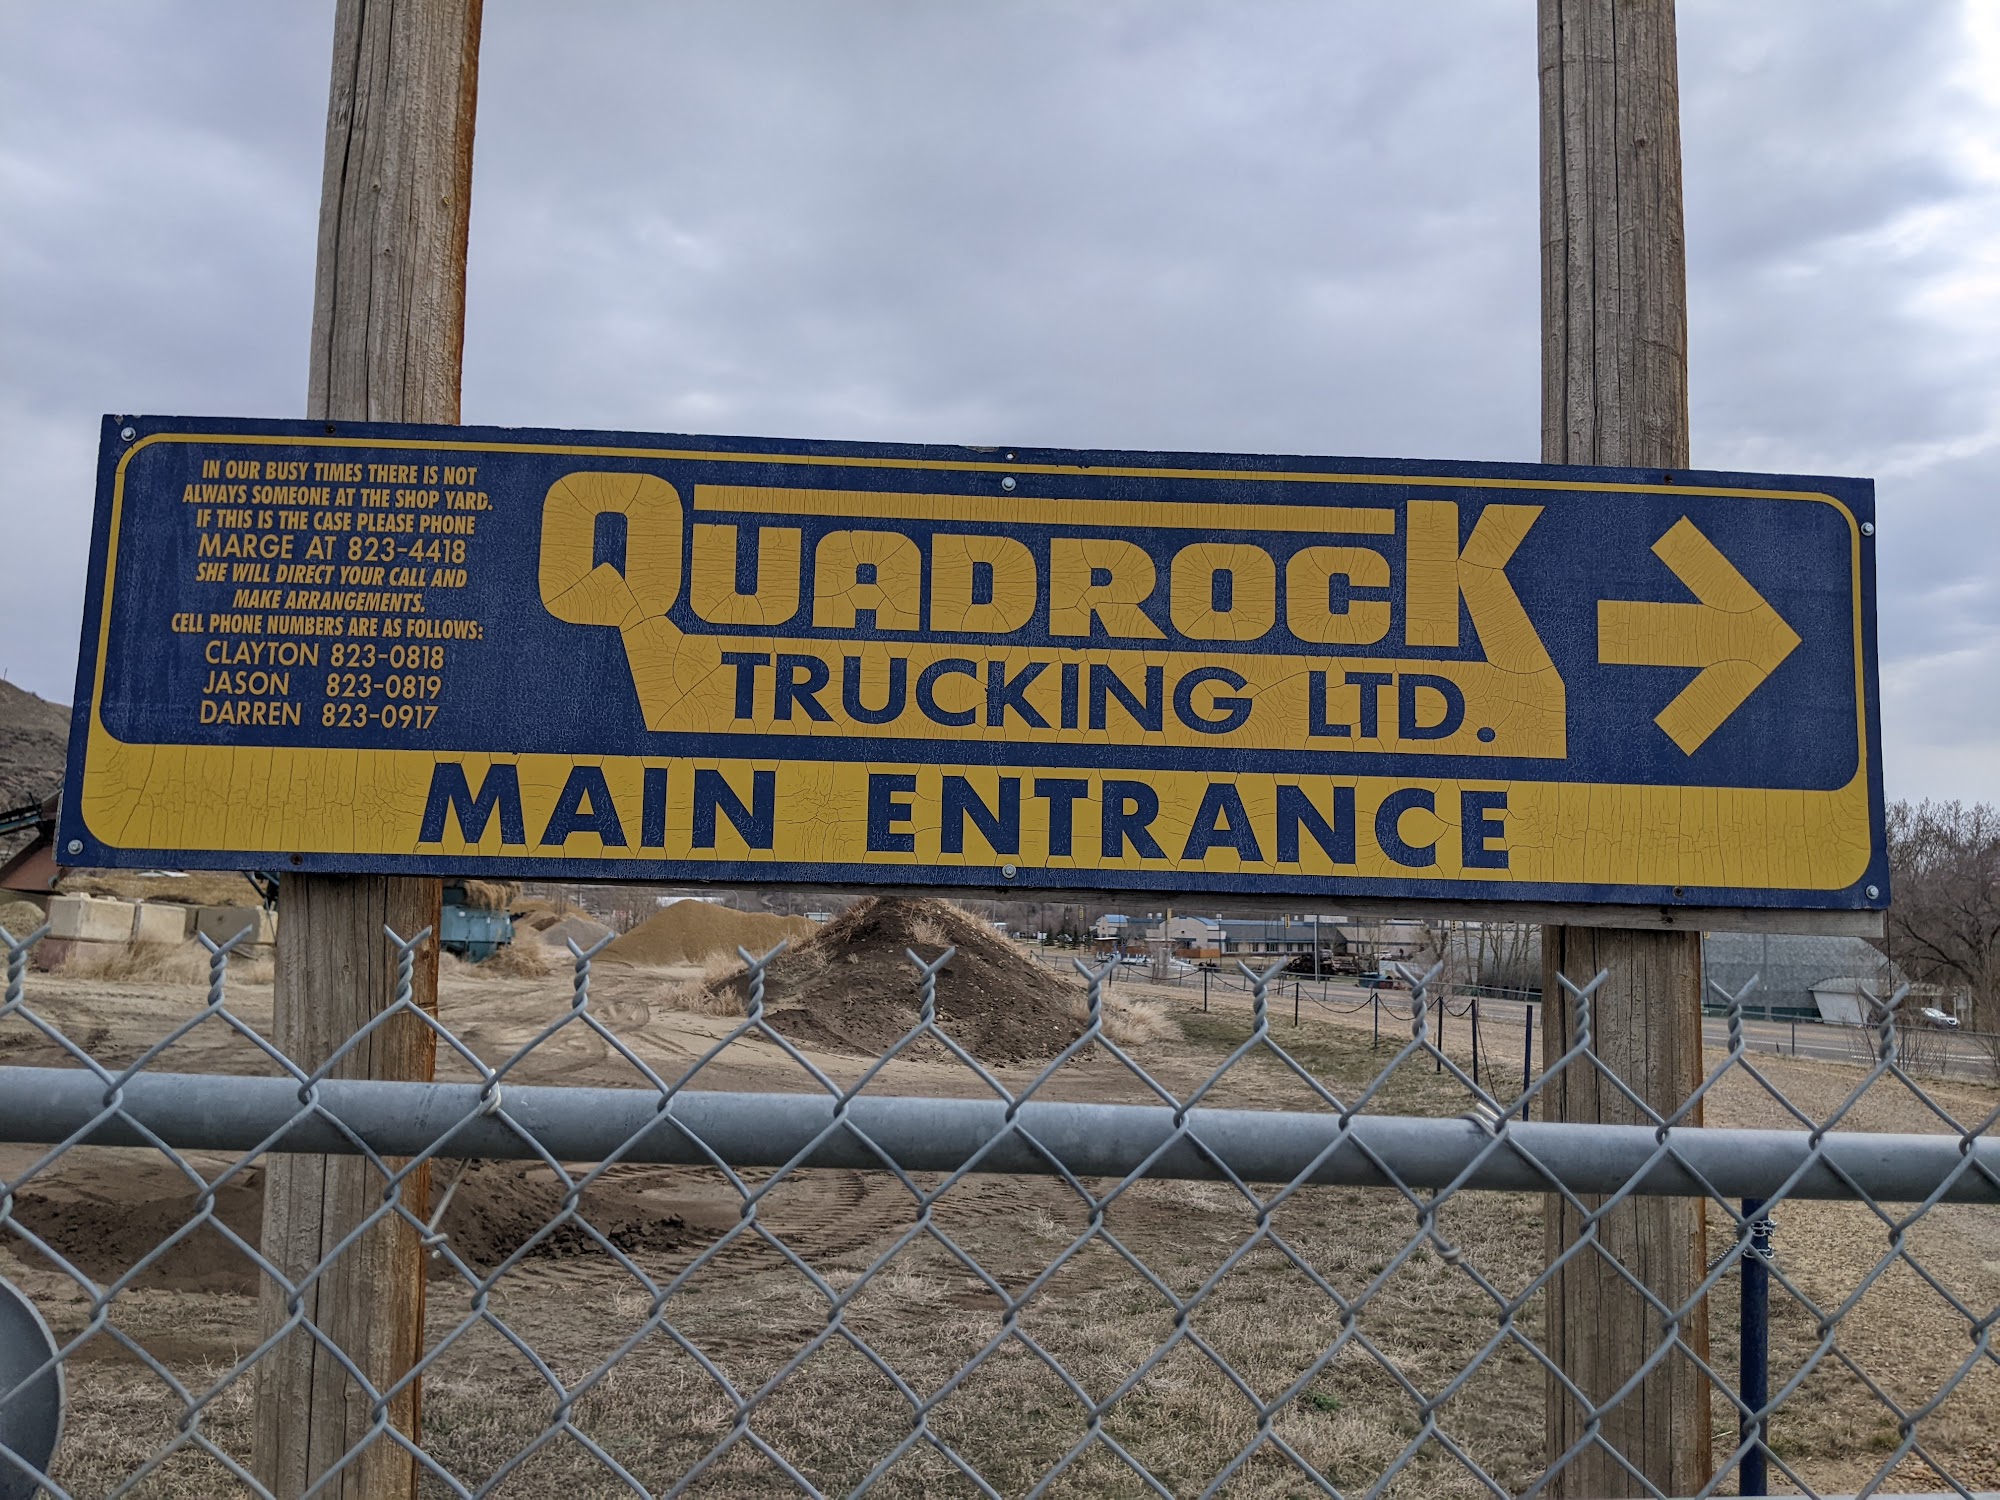 Quadrock Trucking & Excavating Ltd N Dinosaur Trail, Drumheller Alberta T0J 0Y0